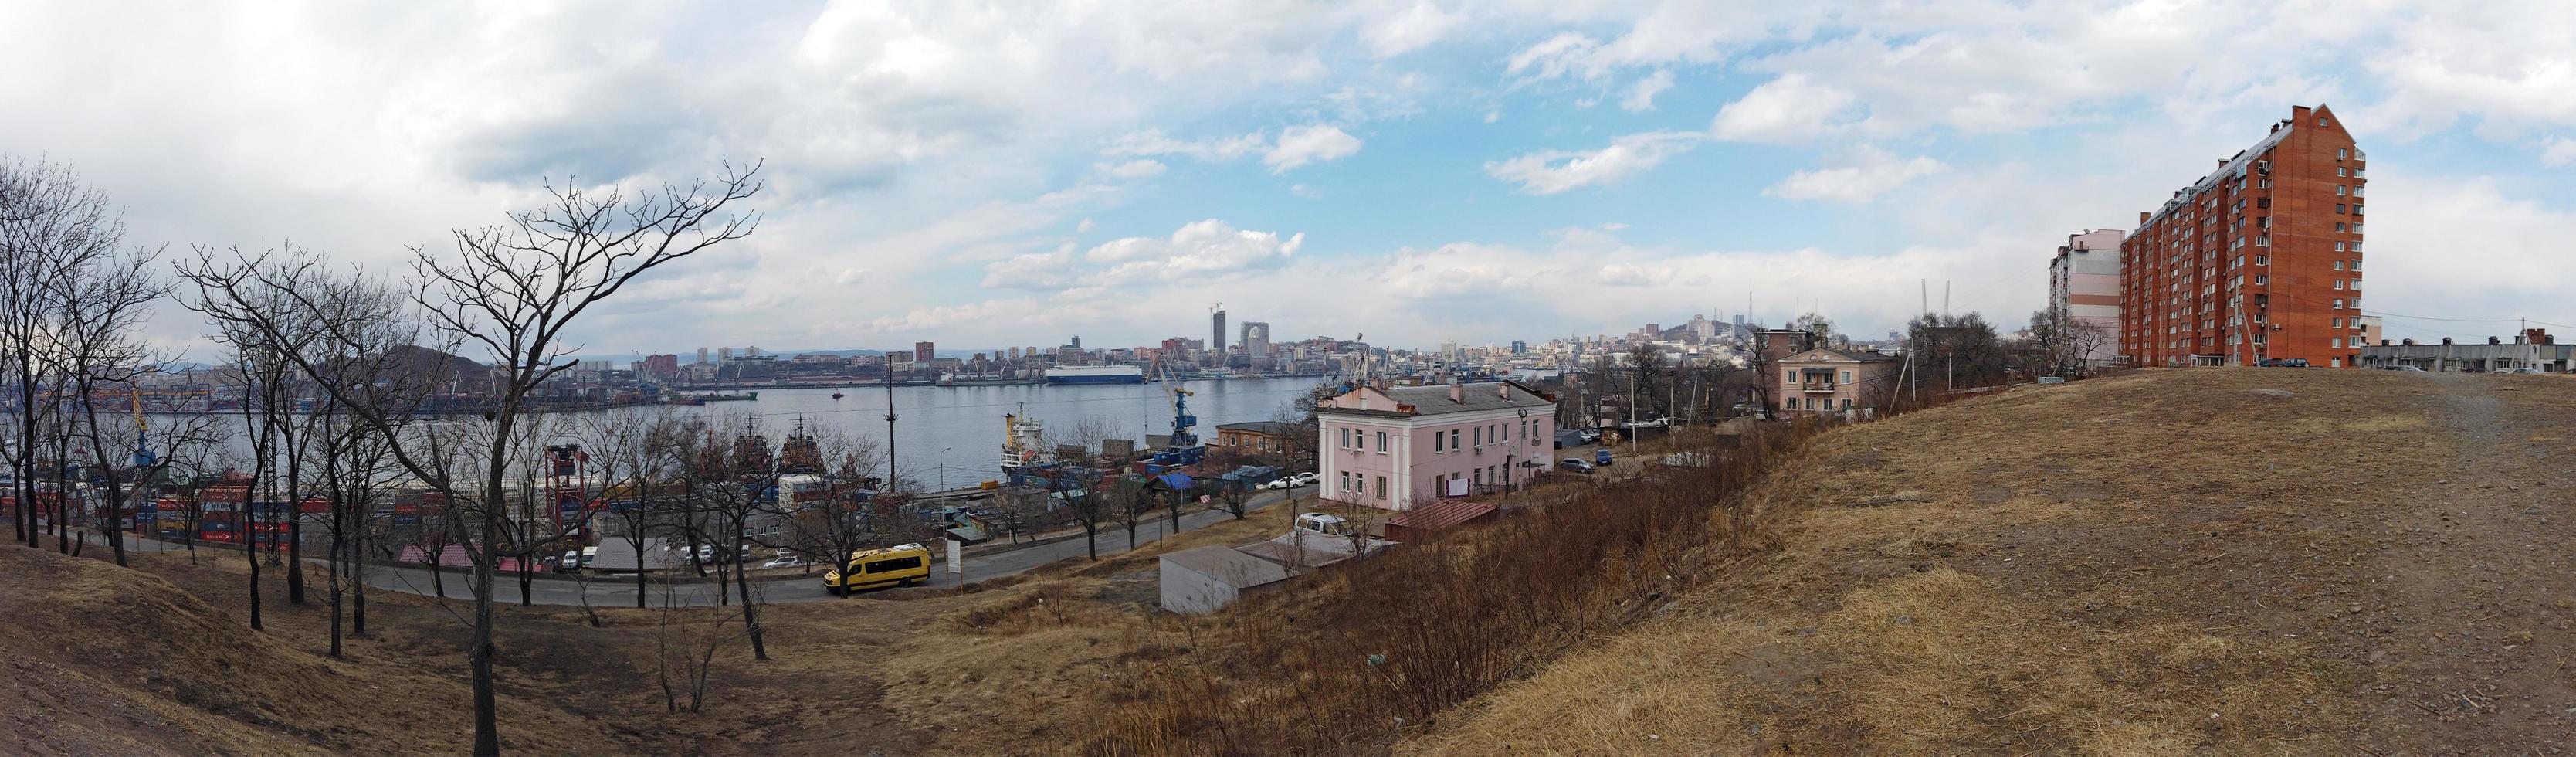 vladivostok, primorsky krai - 6 aprile 2018-panorama del paesaggio urbano con vista sulla baia. foto